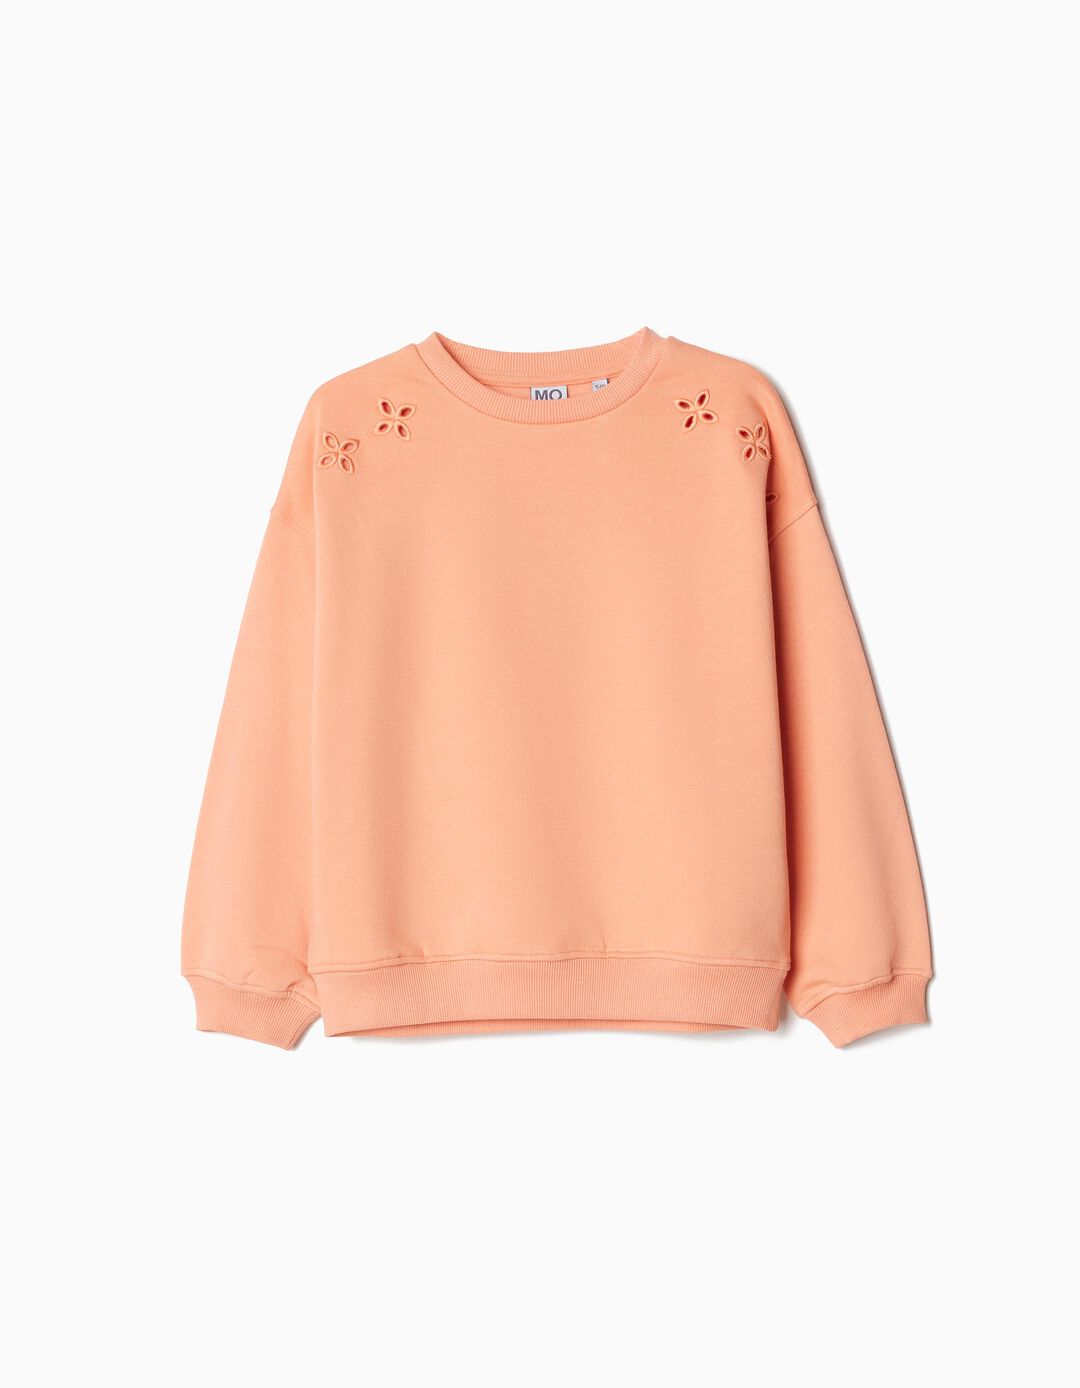 Embroidered Plush Sweatshirt, Girl, Light Orange